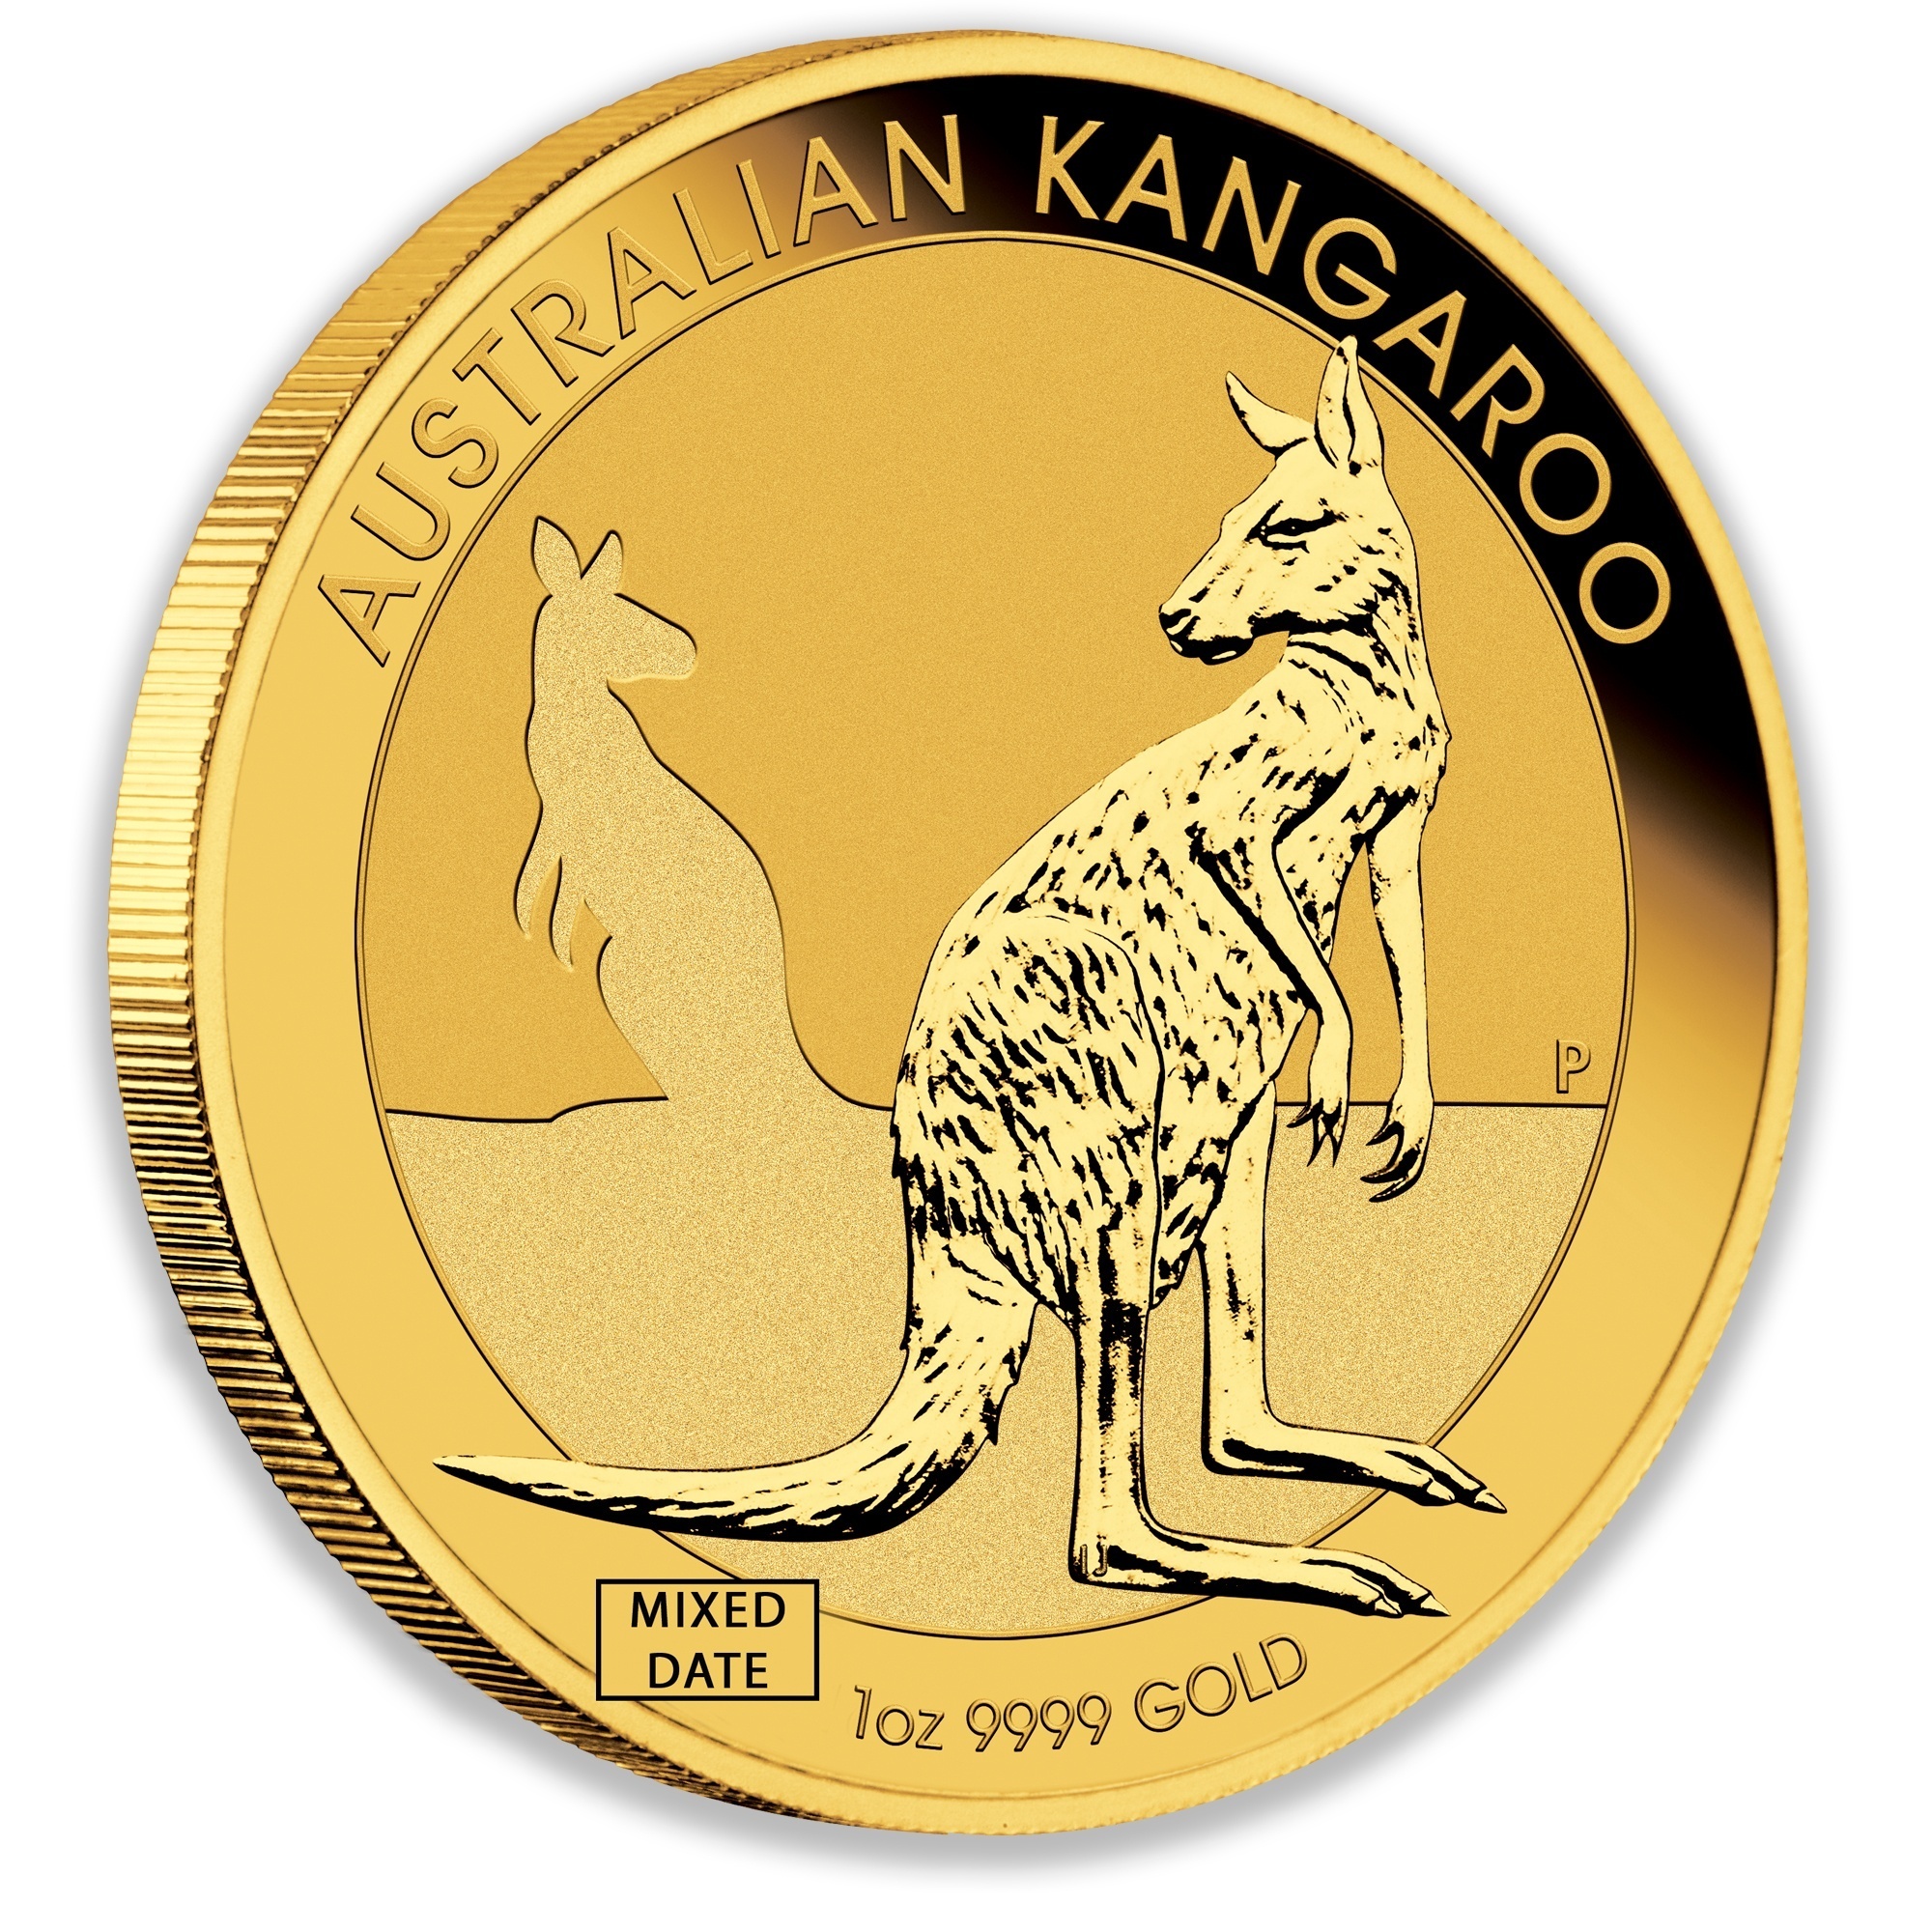 1oz Perth Mint Gold Kangaroo Coin Random Years